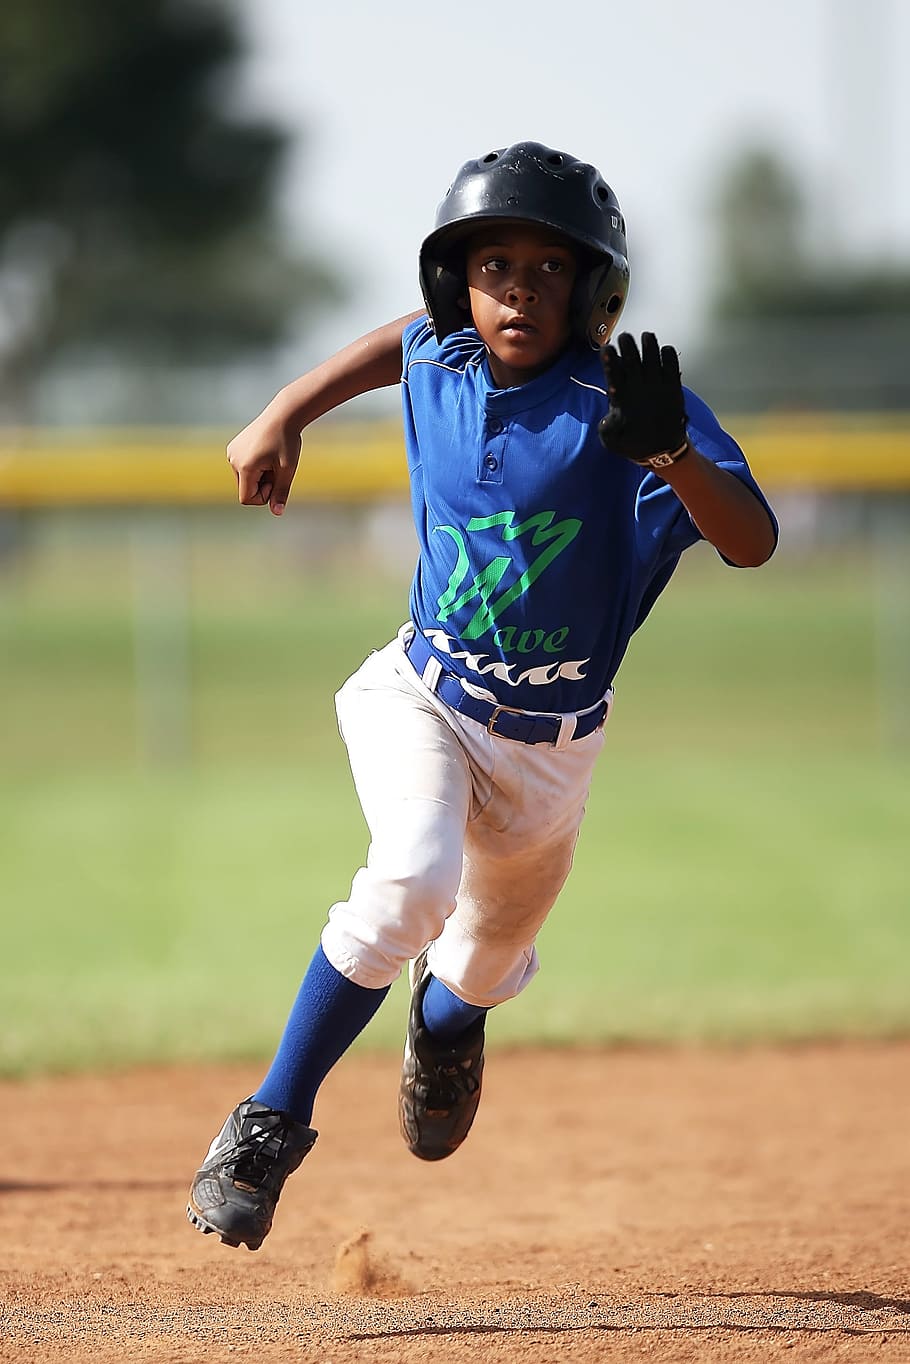 boy running on grass, baseball, player, sport, game, athlete